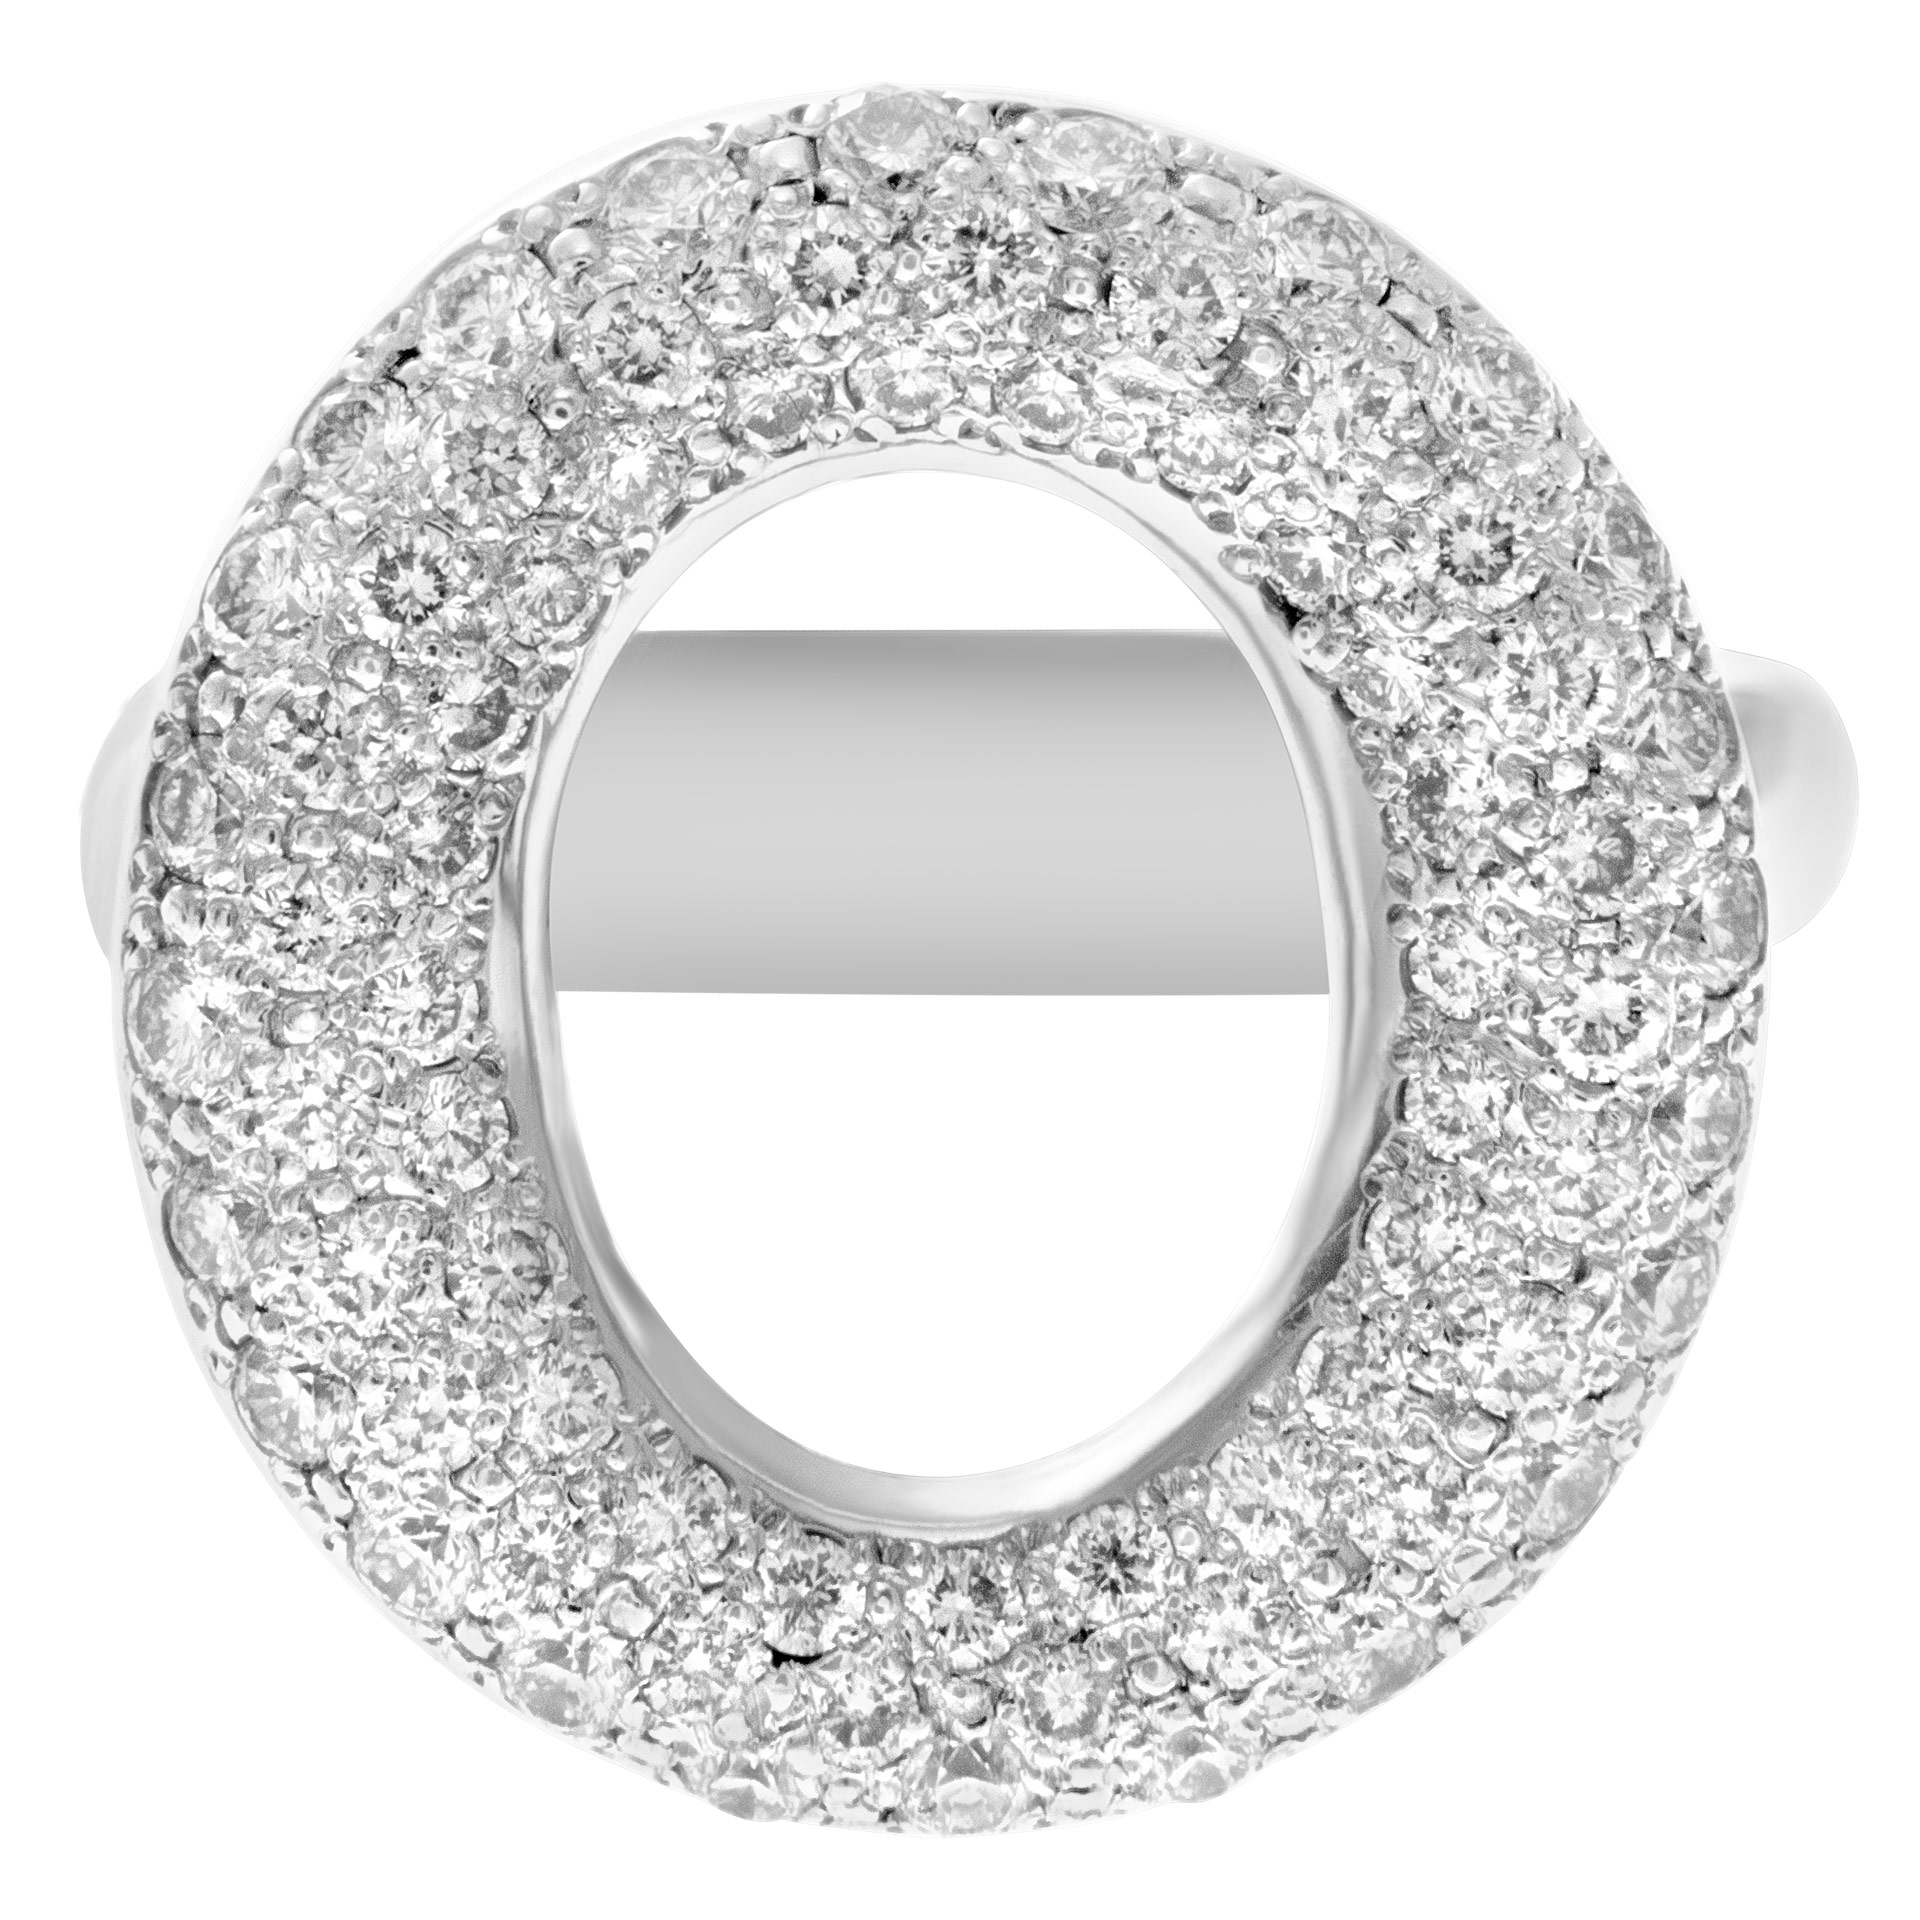 "O" pave diamond ring in 14k white gold, 1 carat of diamonds